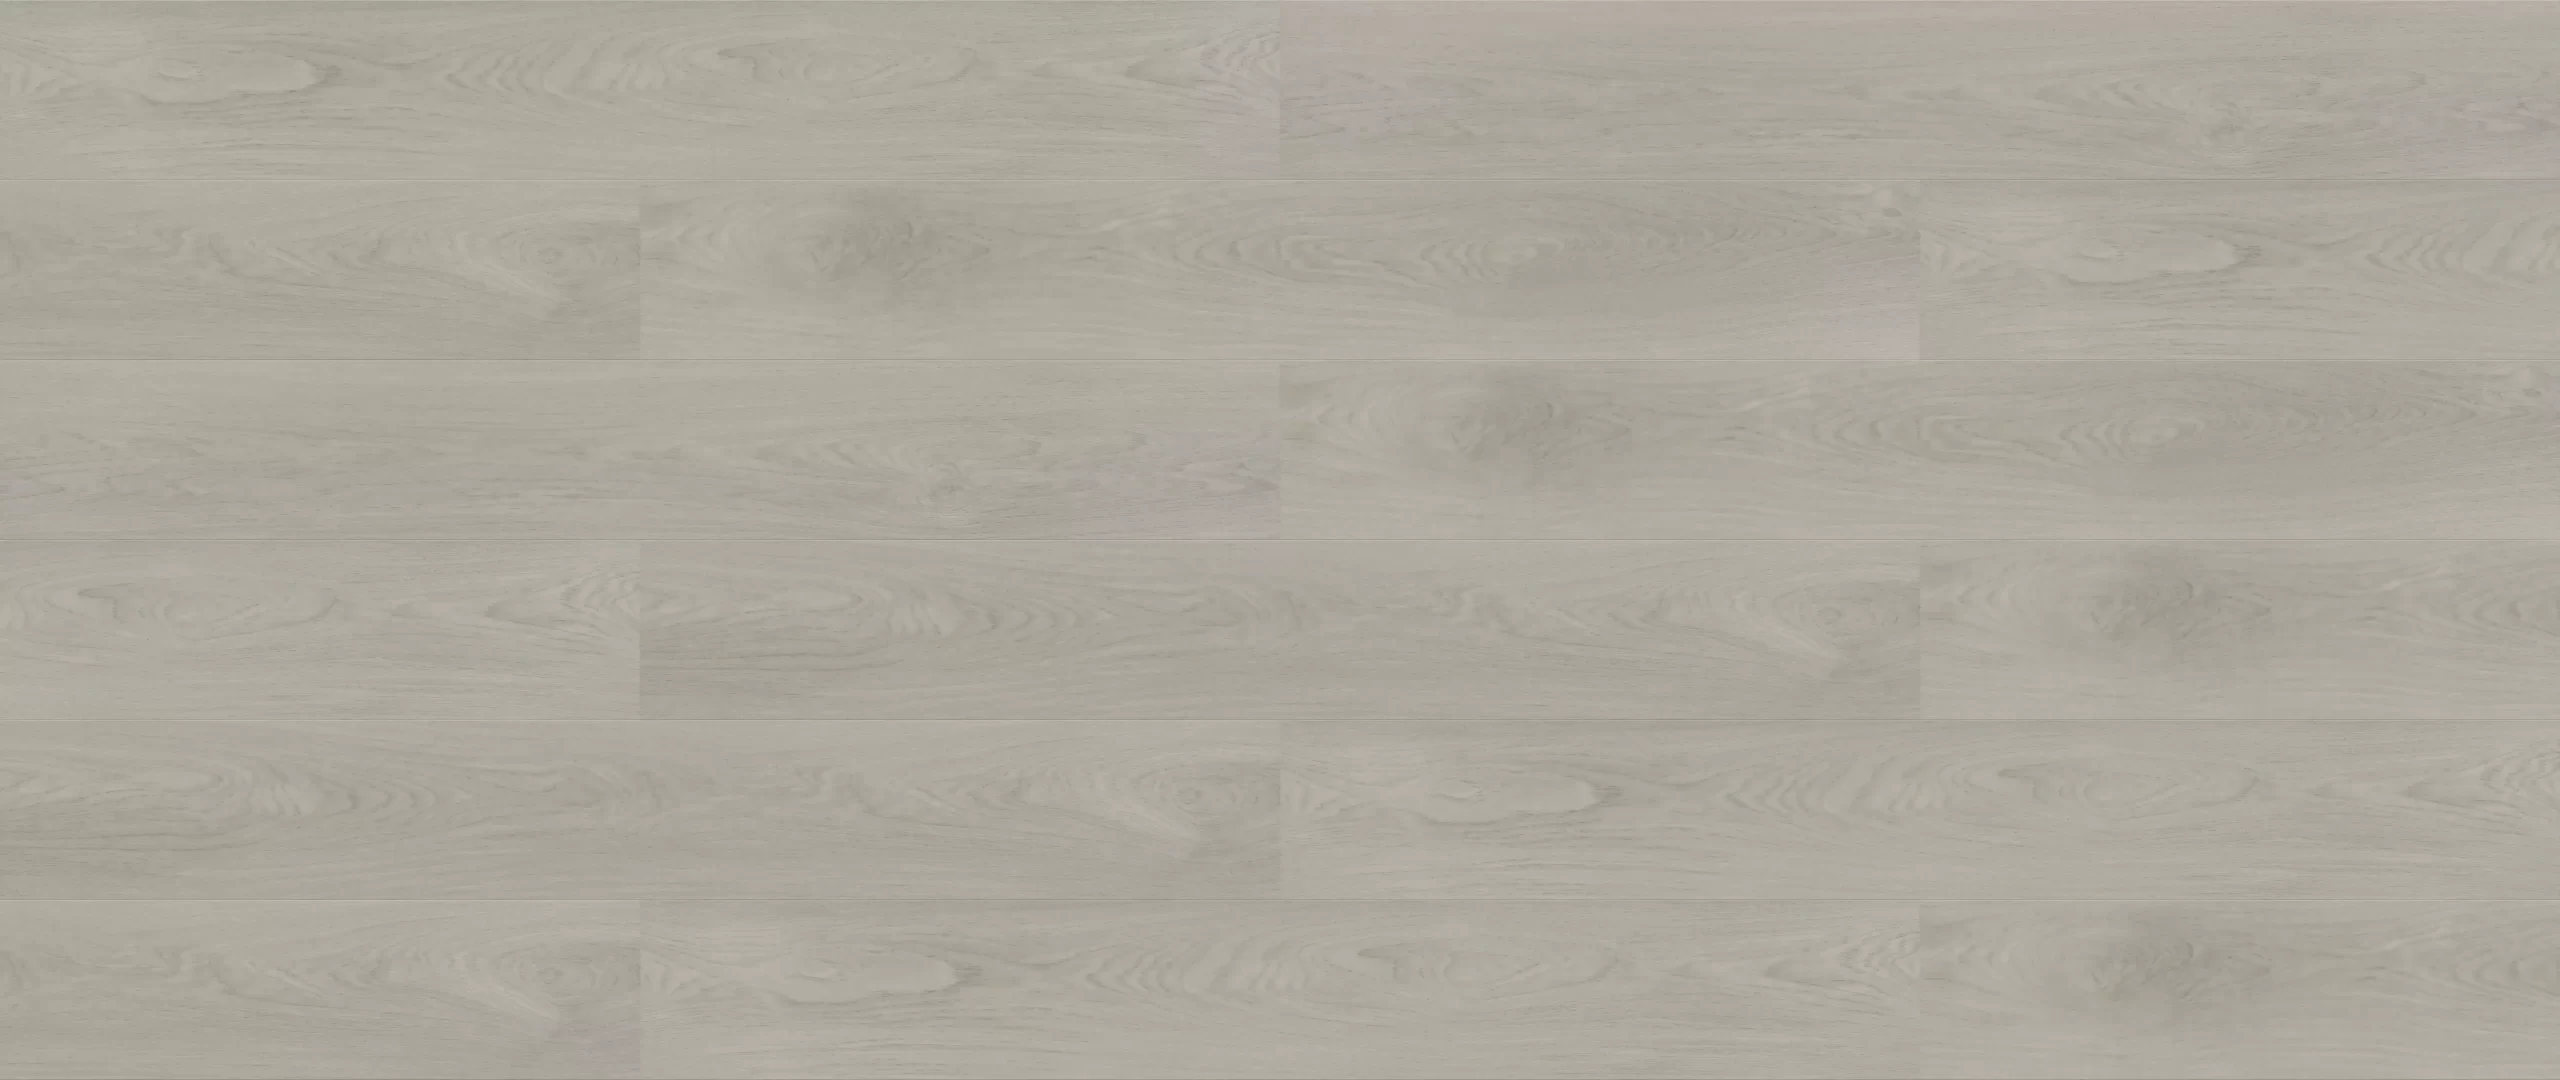 WHITE, Vinyl flooring, floor, flooring, wood vinyl flooring, wood flooring, vinyl, marble vinyl, vinyl look like porcelain, wood floor, wood flooring, vinyl floor